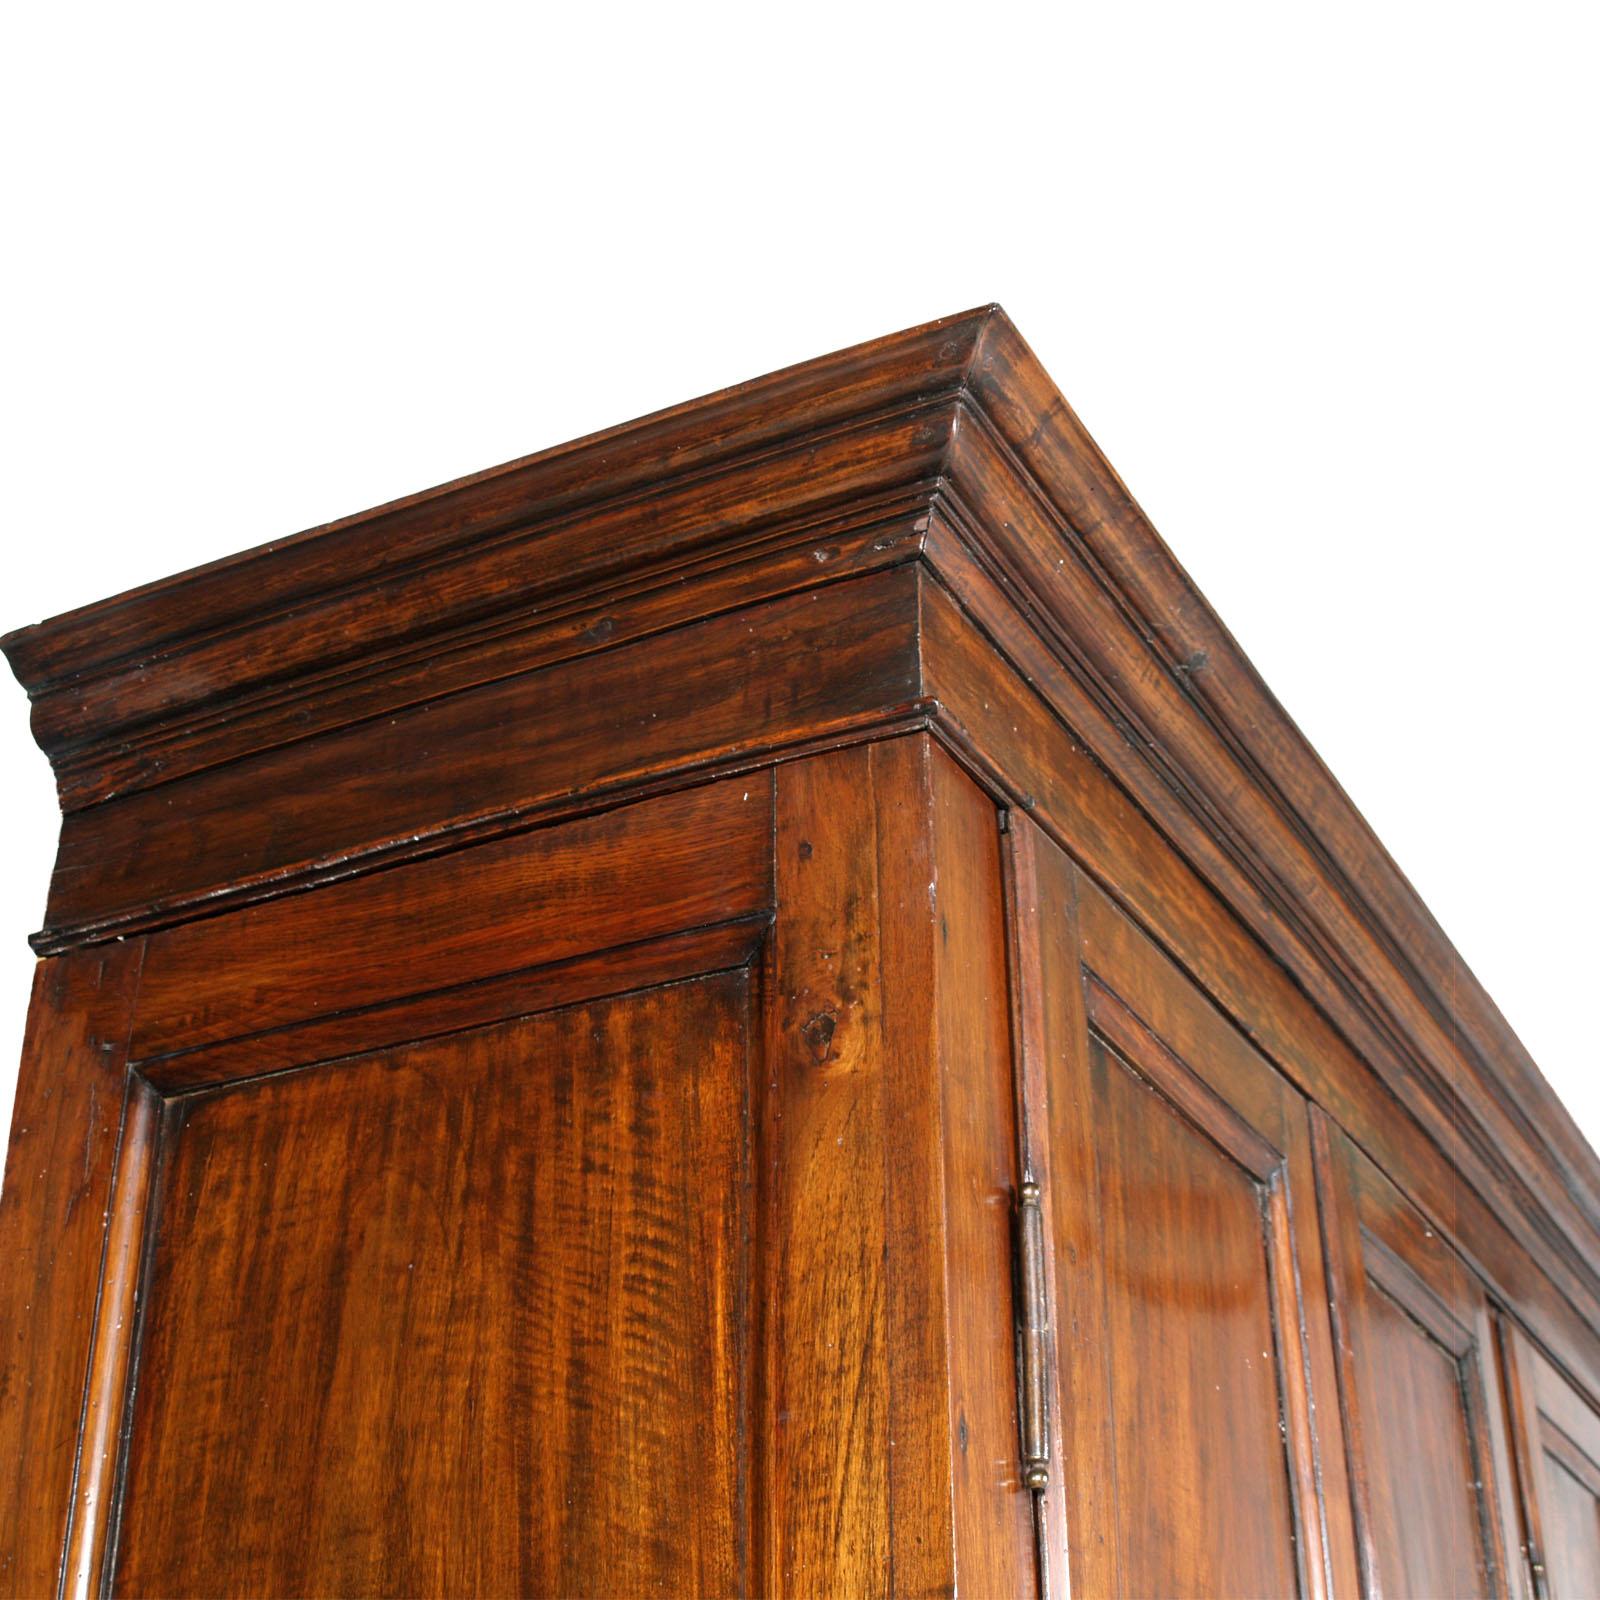 Neoclassical Revival Mid-19th Century Large Neoclassic Cupboard Bookcase Wardrobe in Massive Walnut For Sale